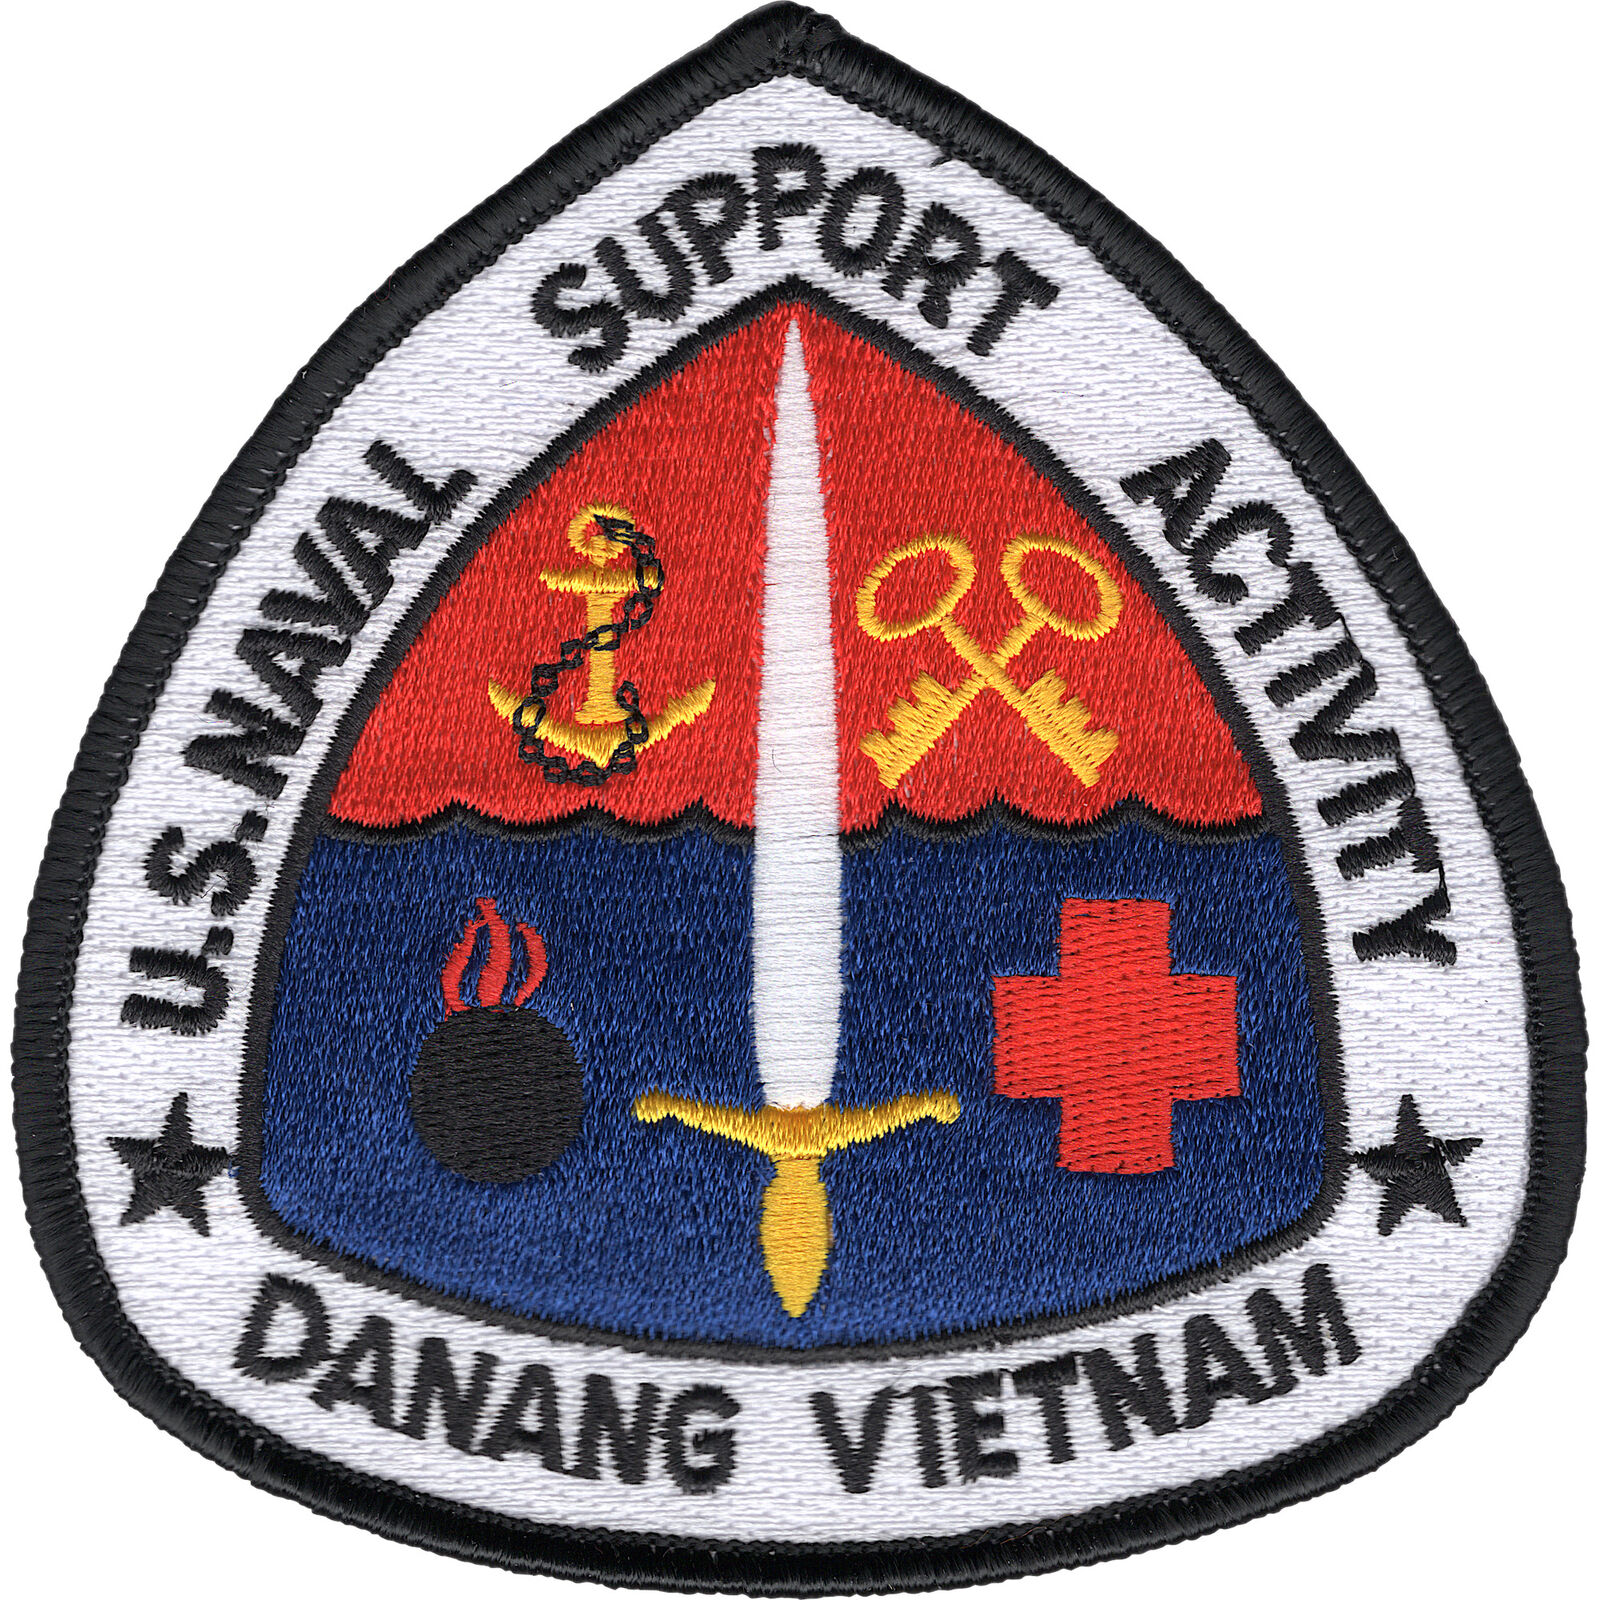 Naval Support Activity Danang Vietnam Patch